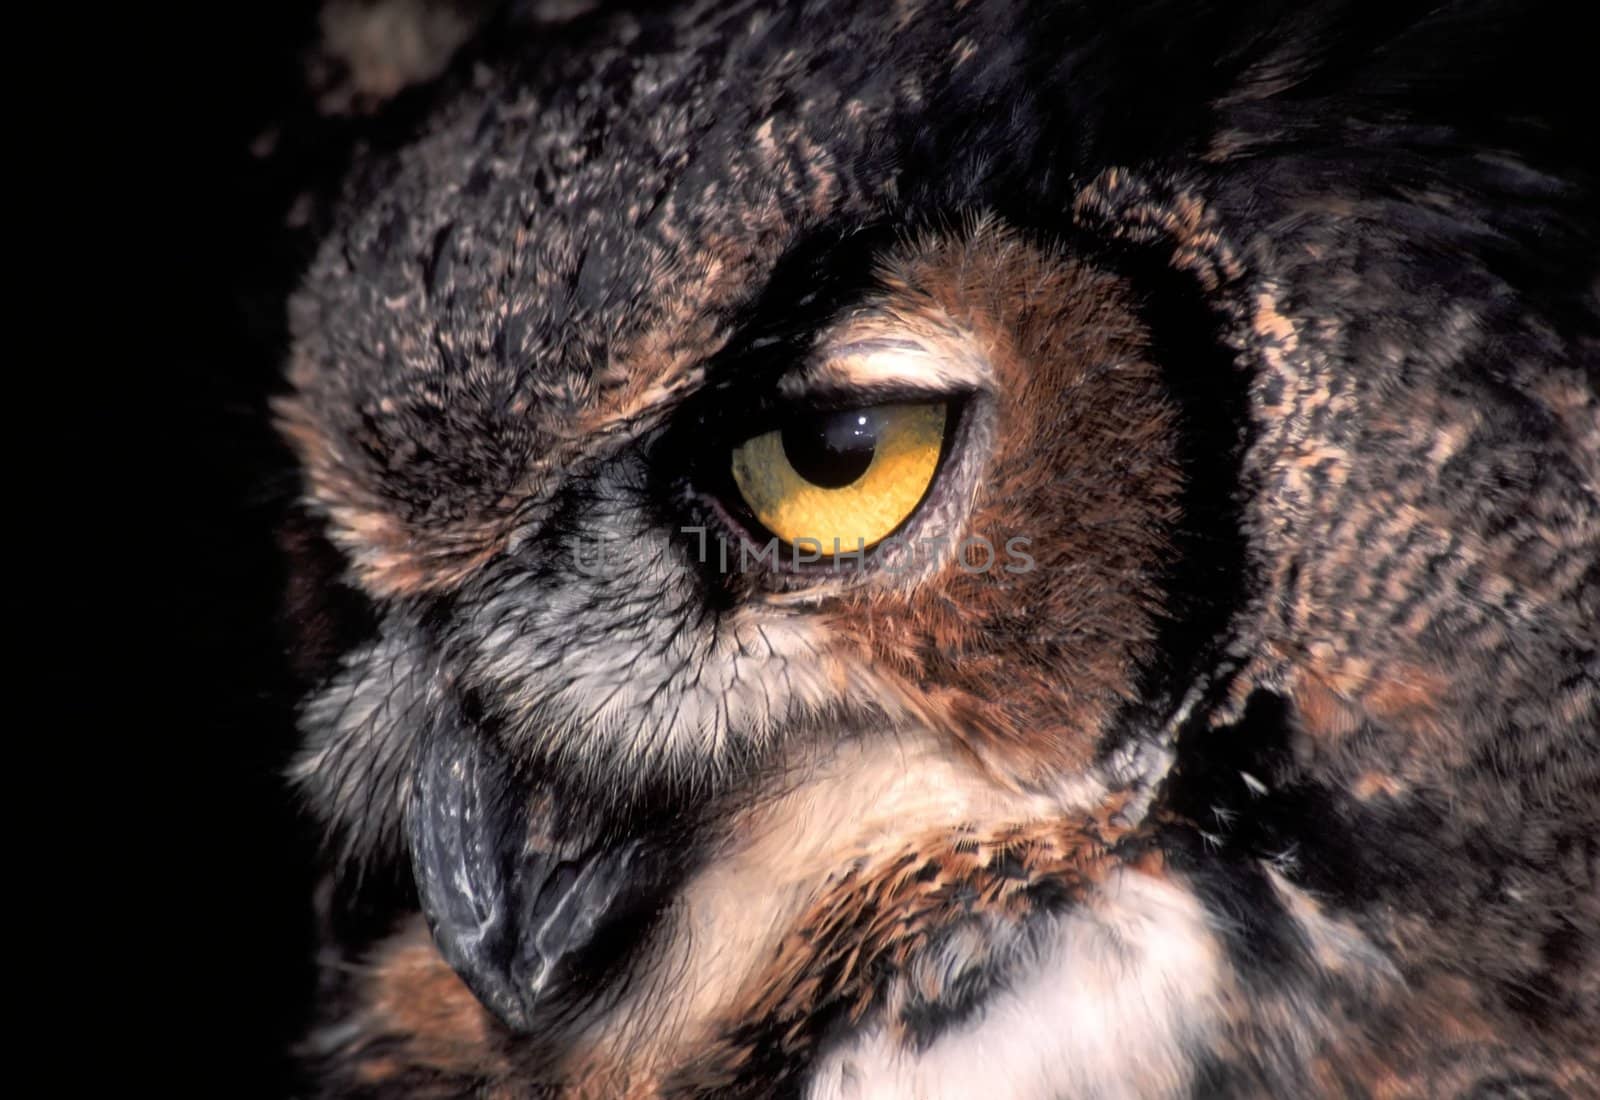 Piercing gaze of the Great Horned Owl (Bubo virginianus).